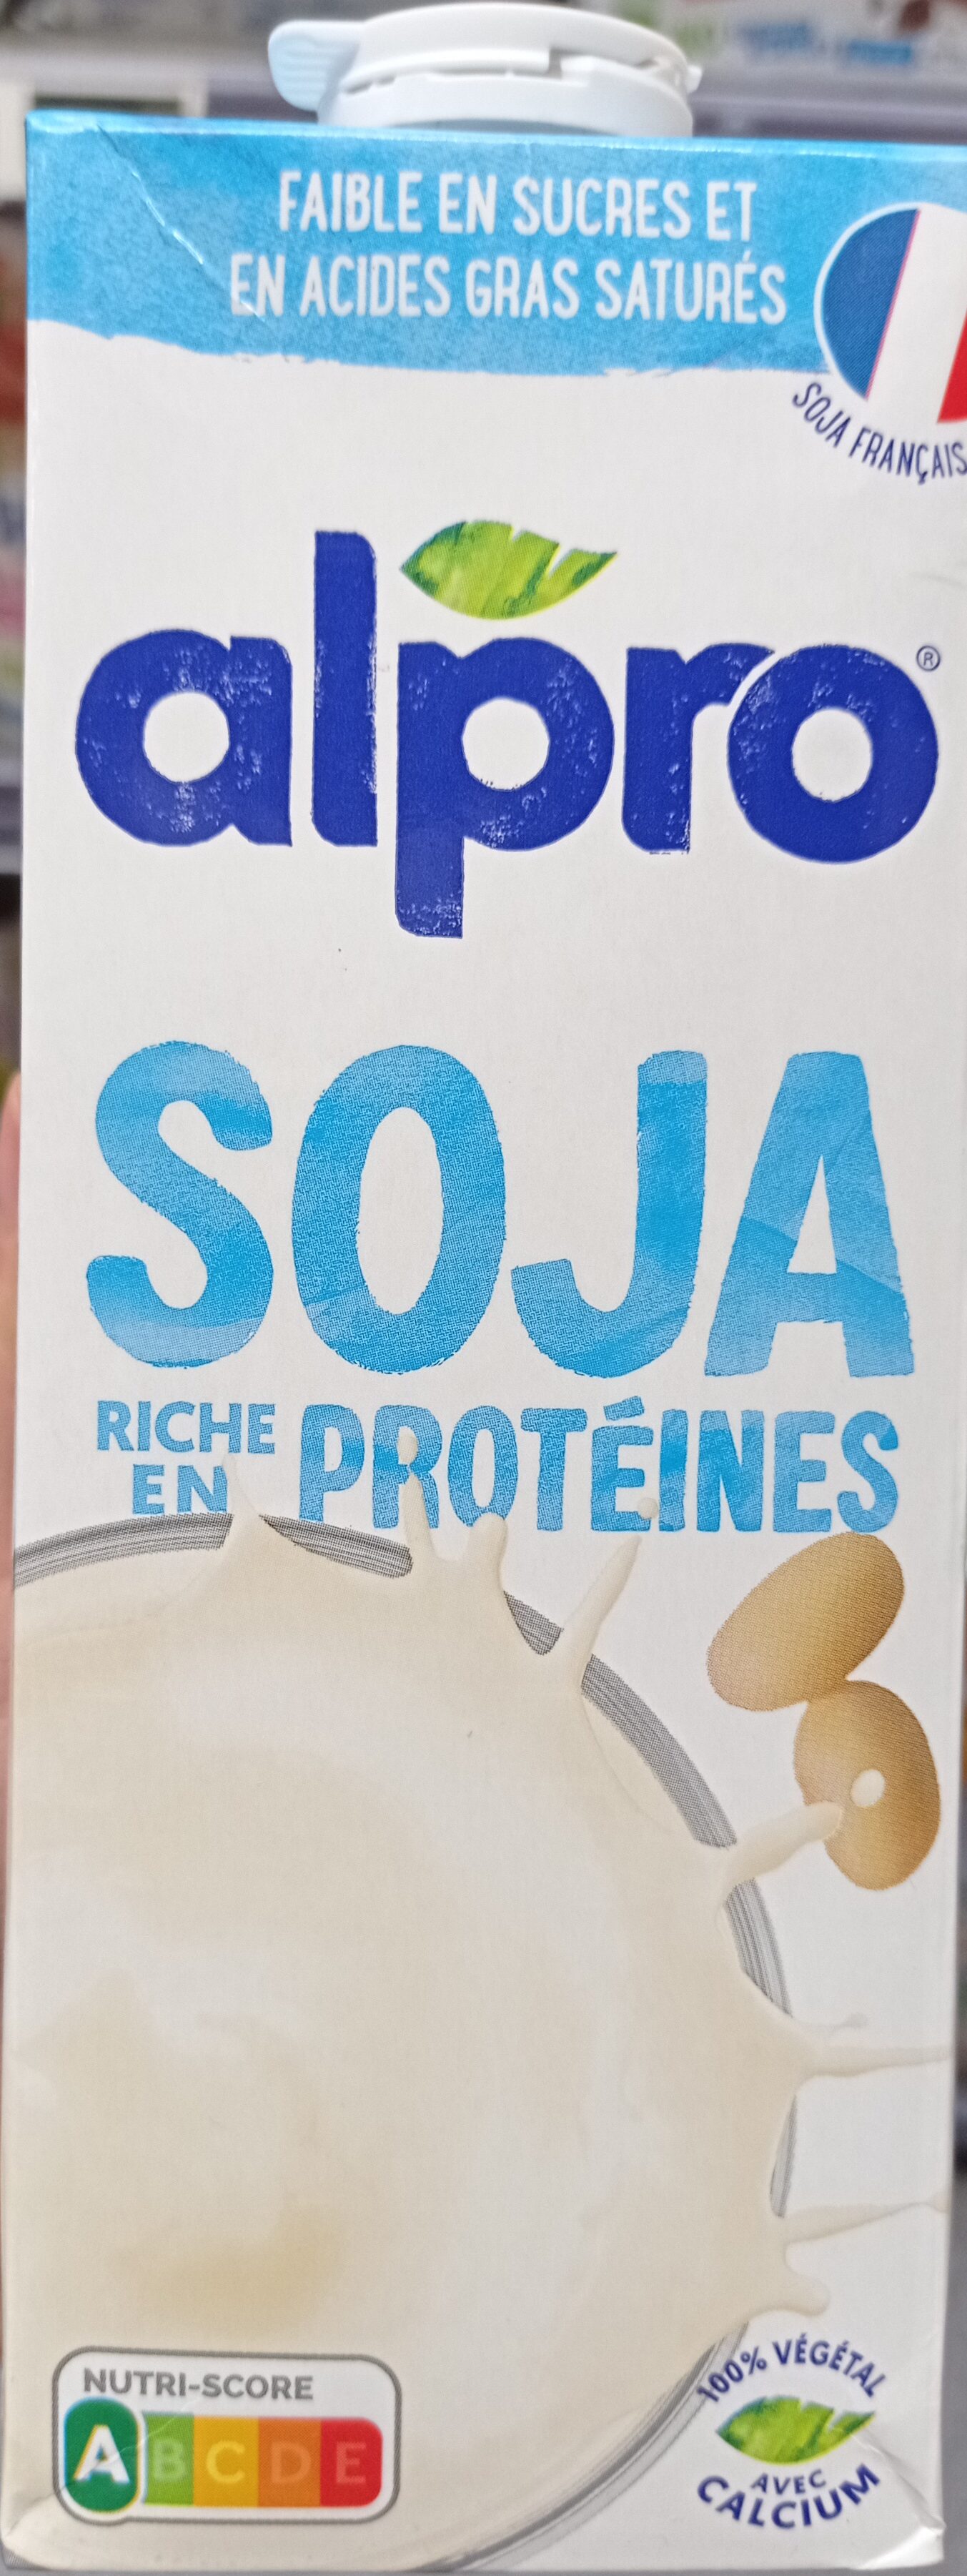 Soja riche en protéines - Product - fr